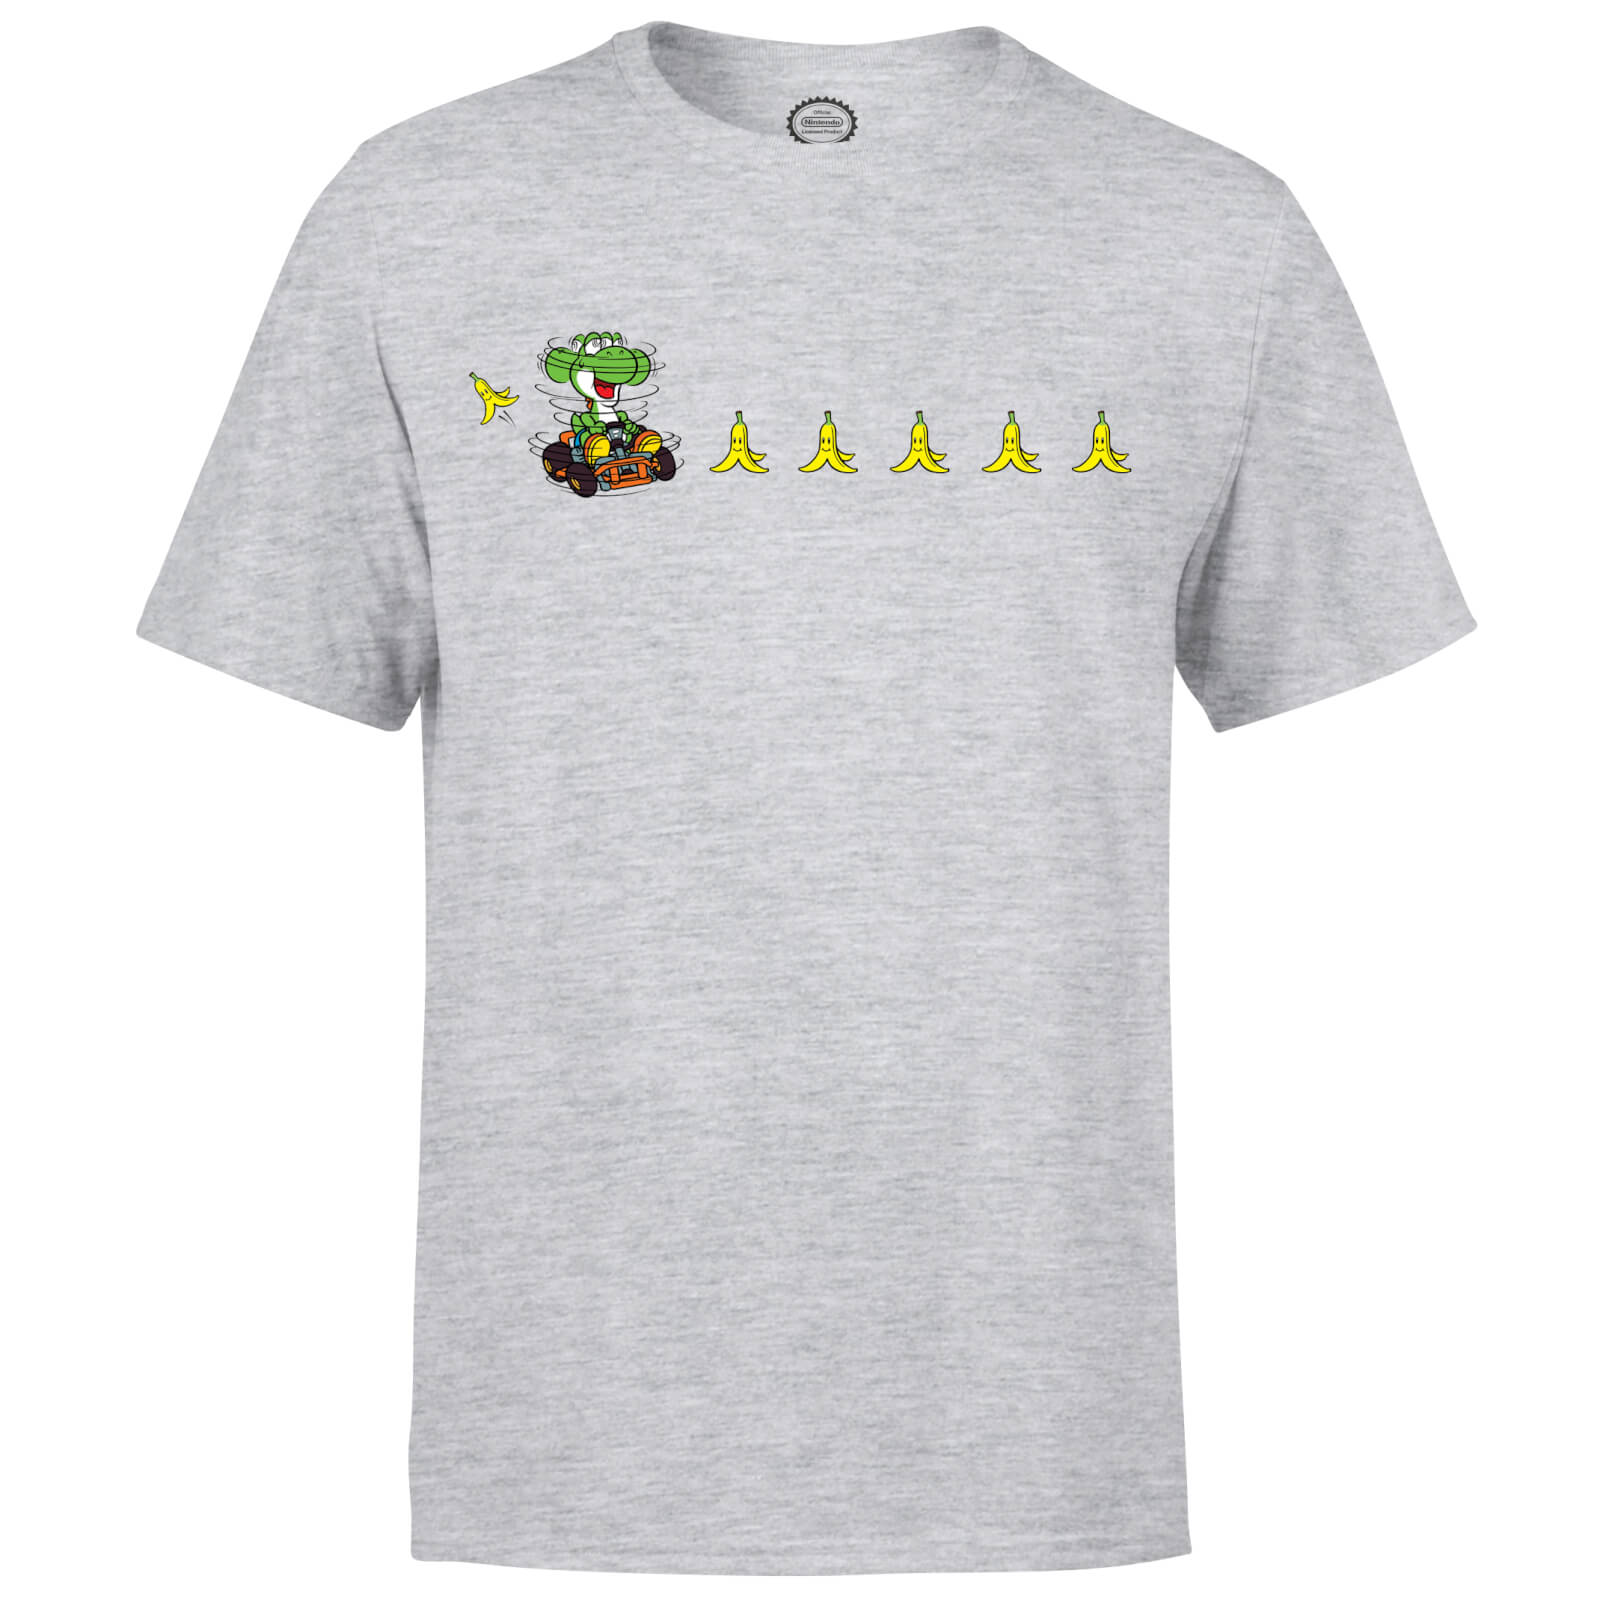 Nintendo Men's Six Banana Mario Kart T-Shirt - XXL